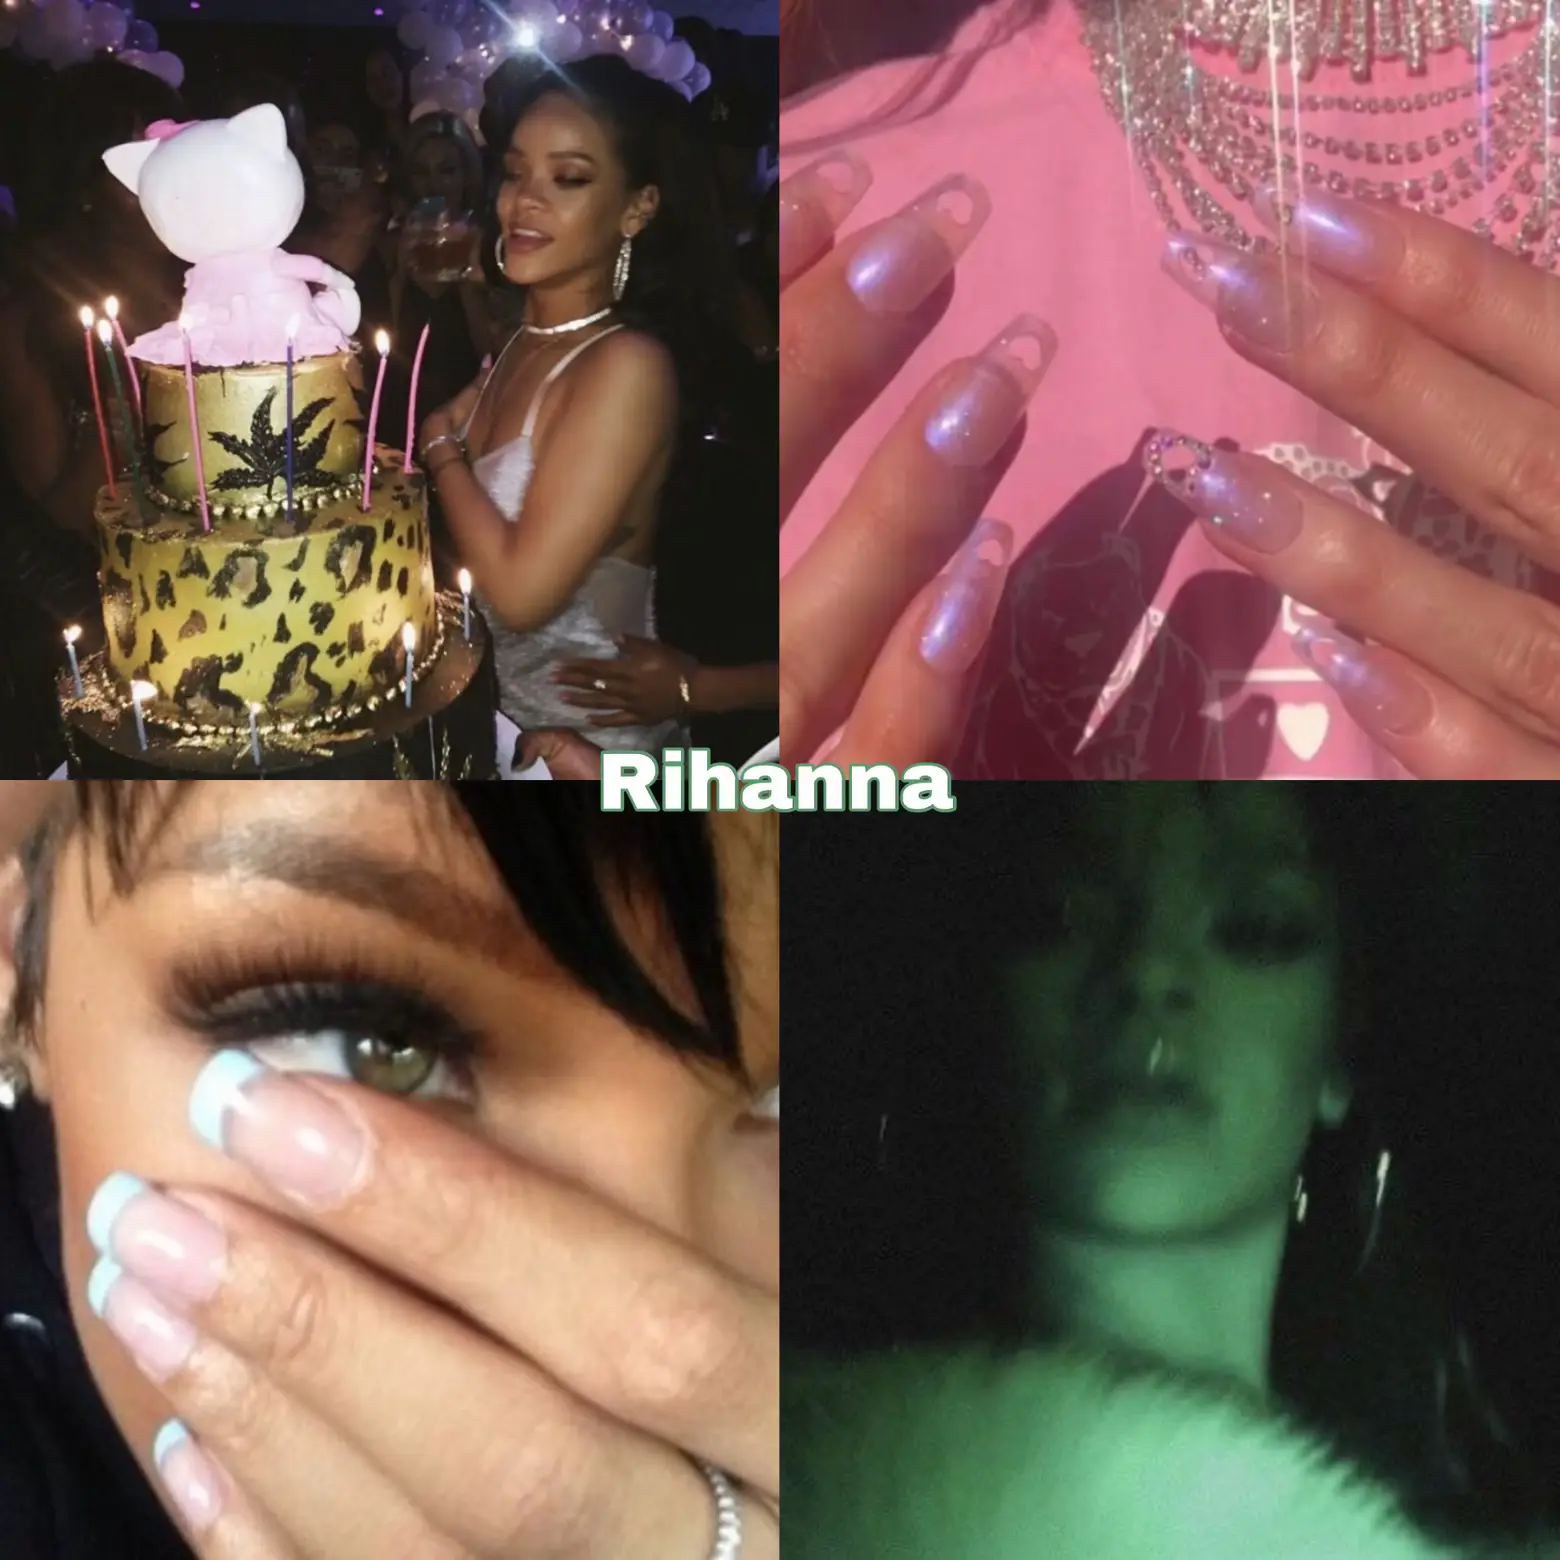  A collage of photos of Rihanna.